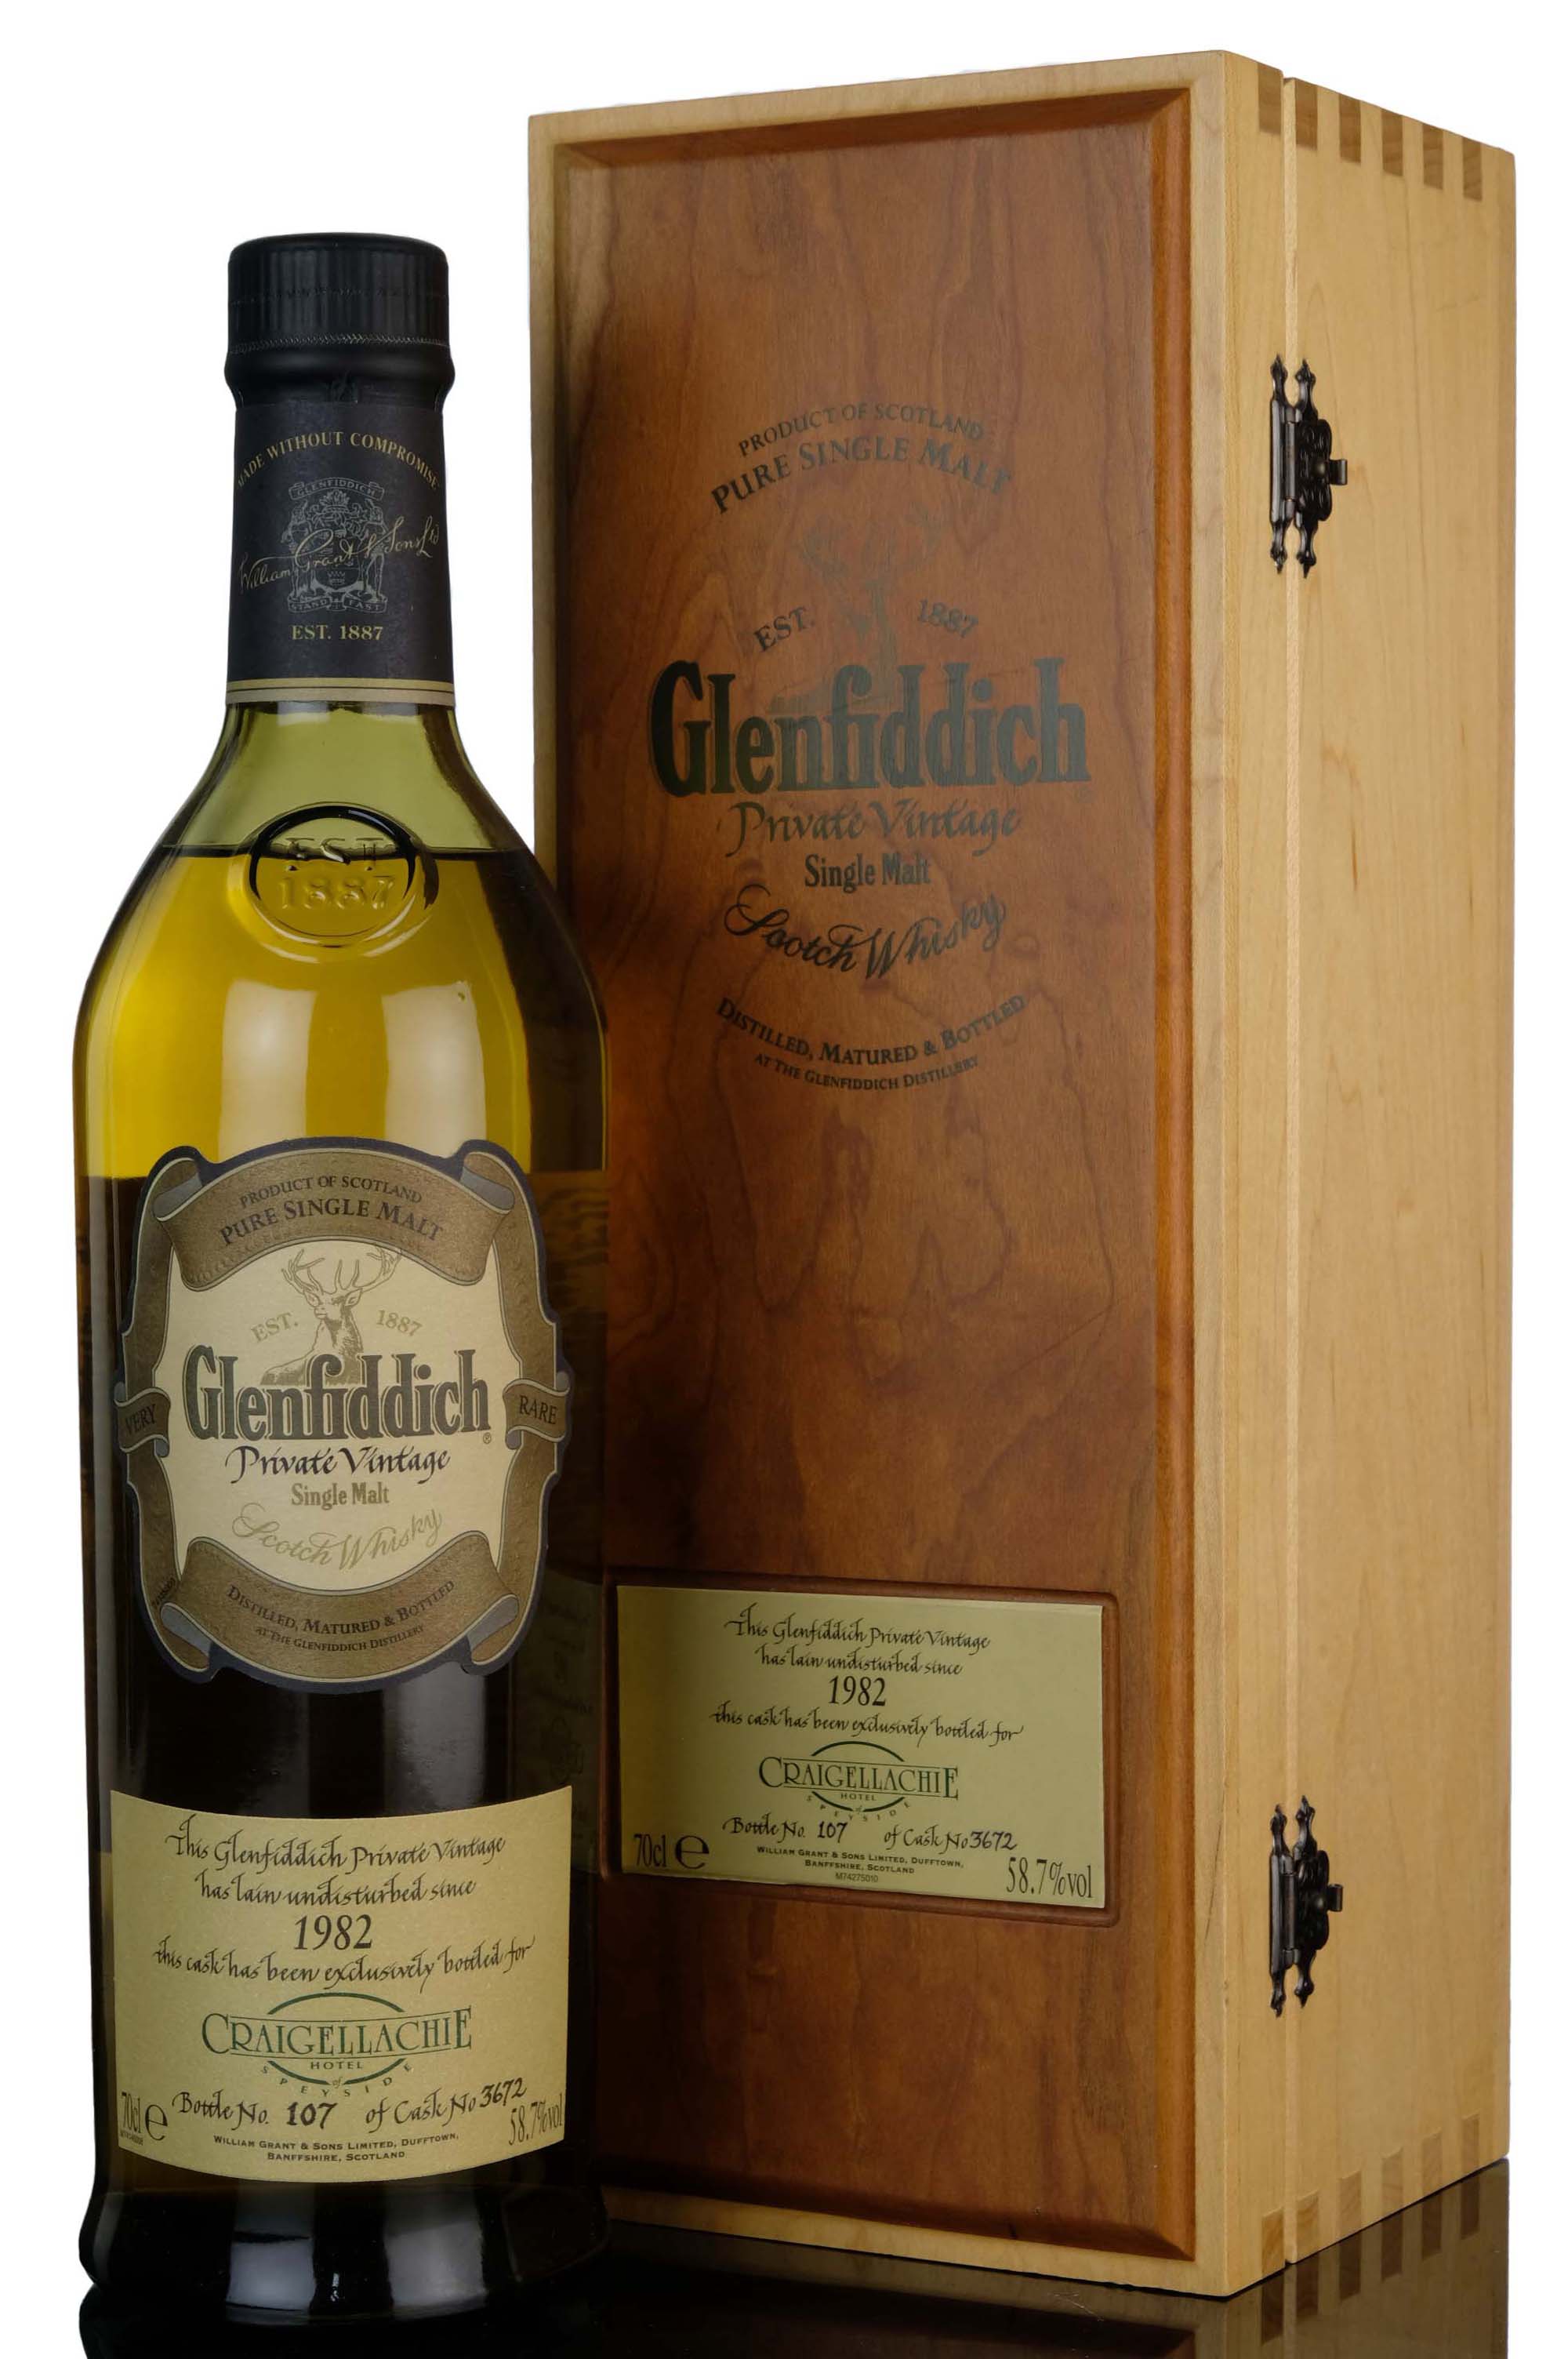 Glenfiddich 1982 - Private Vintage - Single Cask 3672 - Craigellachie Hotel Exclusive